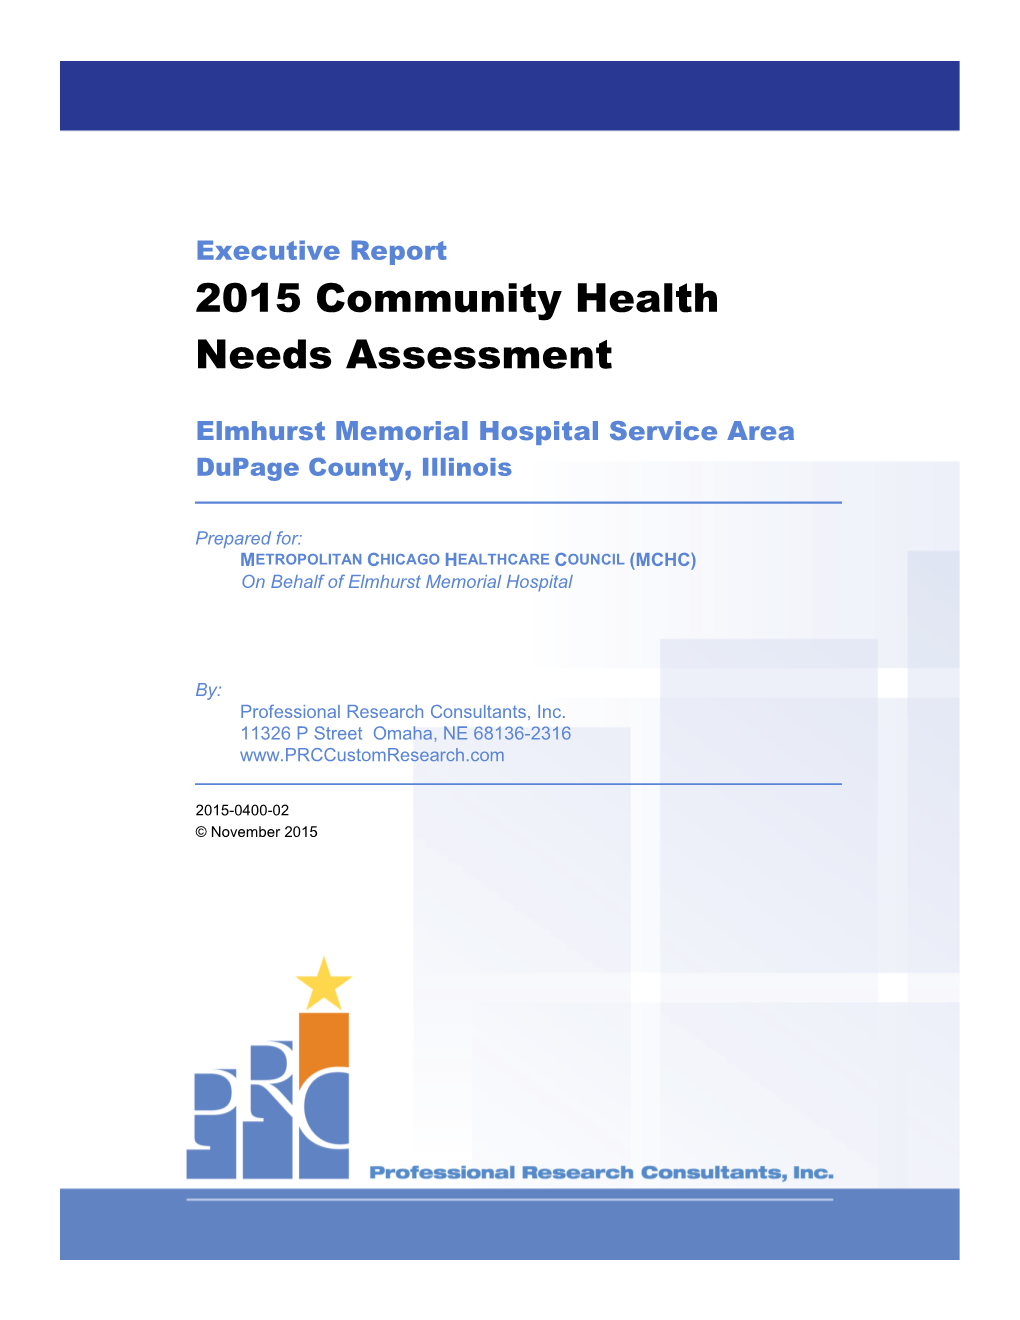 Executive Report 2015 Community Health Needs Assessment